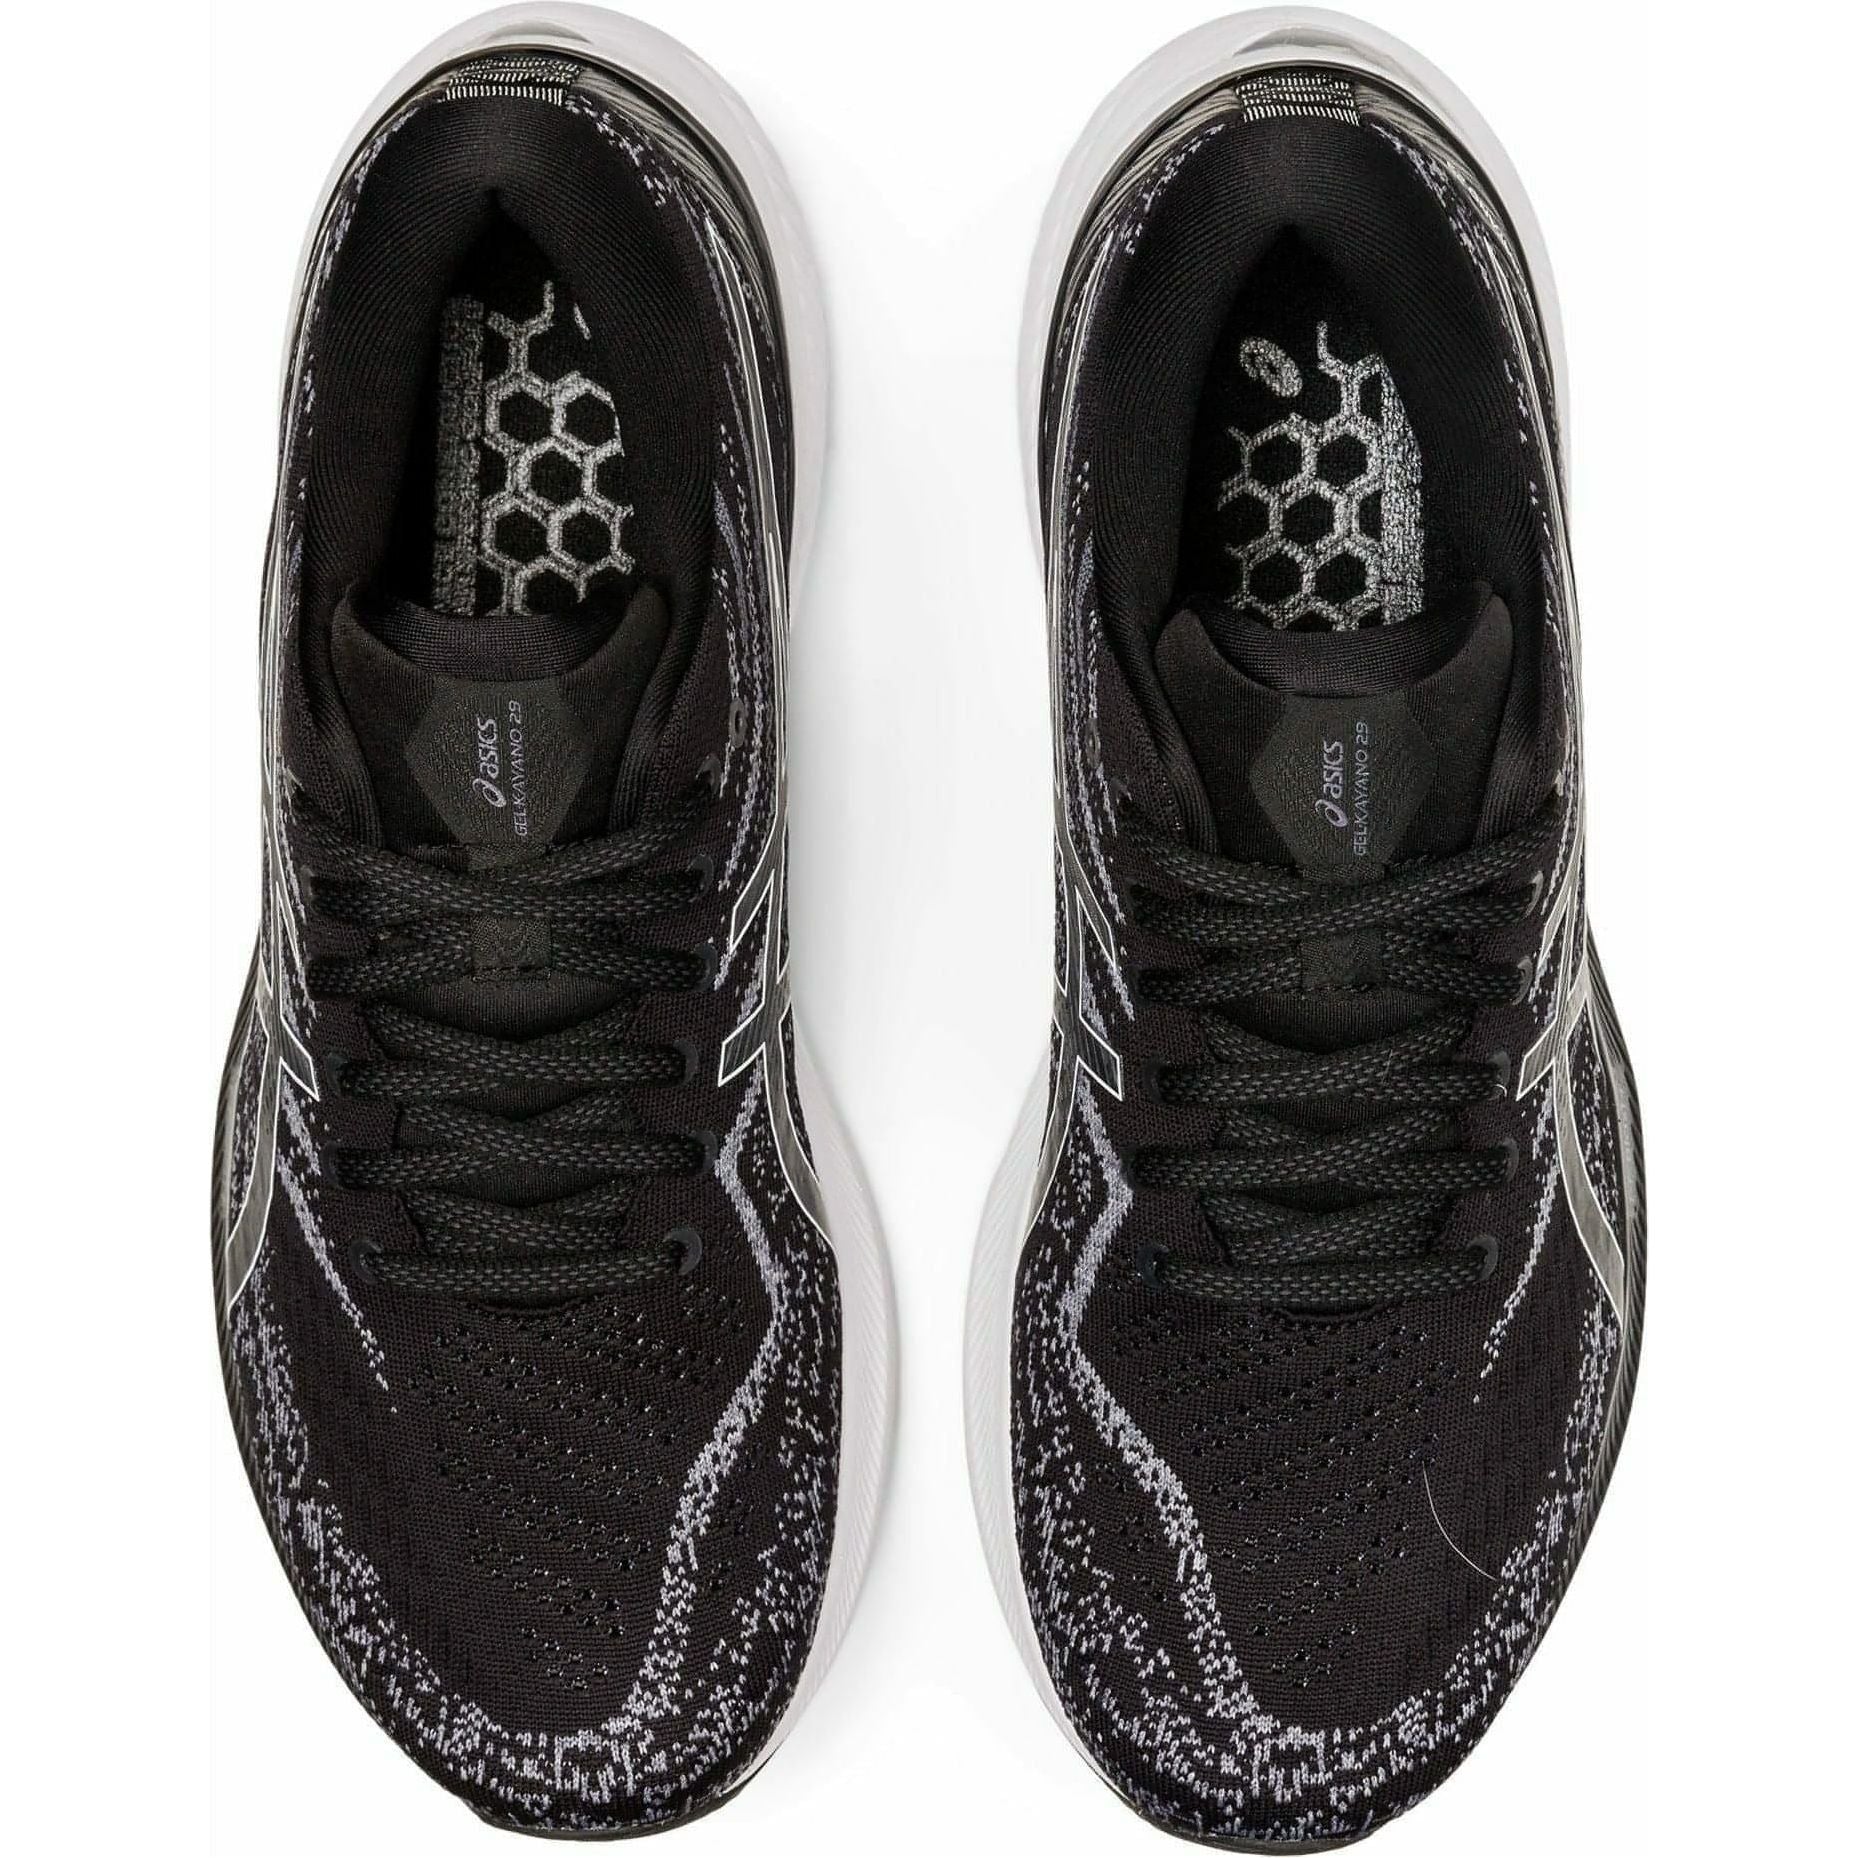 Asics Gel Kayano 29 WIDE FIT (2E) Mens Running Shoes - Black - Start Fitness